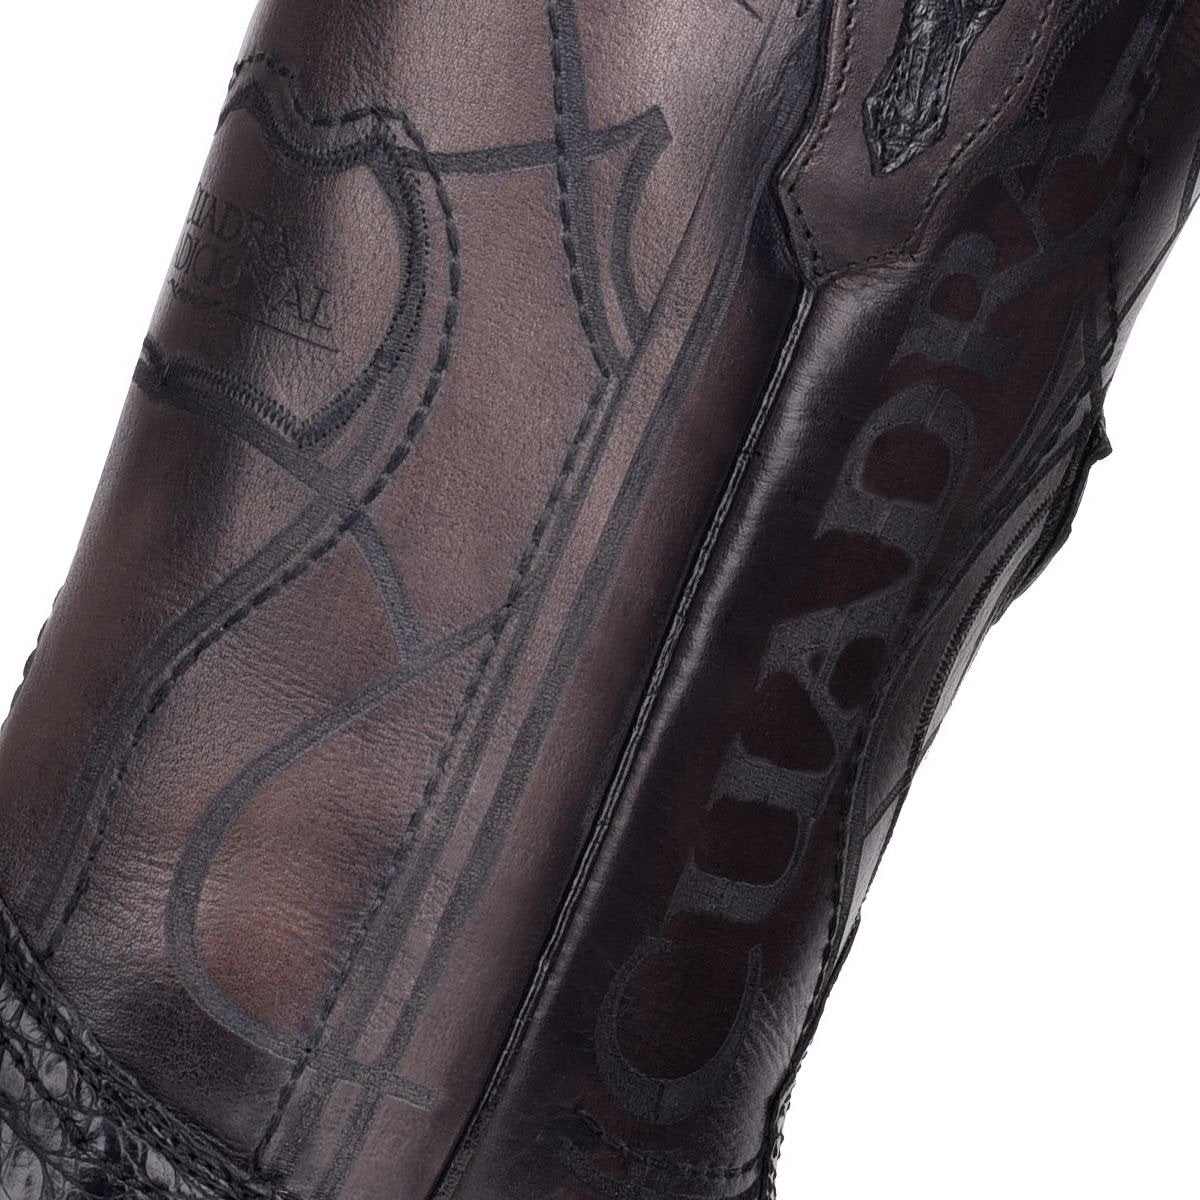 1E10FY - Cuadra black casual cowboy fuscus caiman leather boots for men-CUADRA-Kuet-Cuadra-Boots